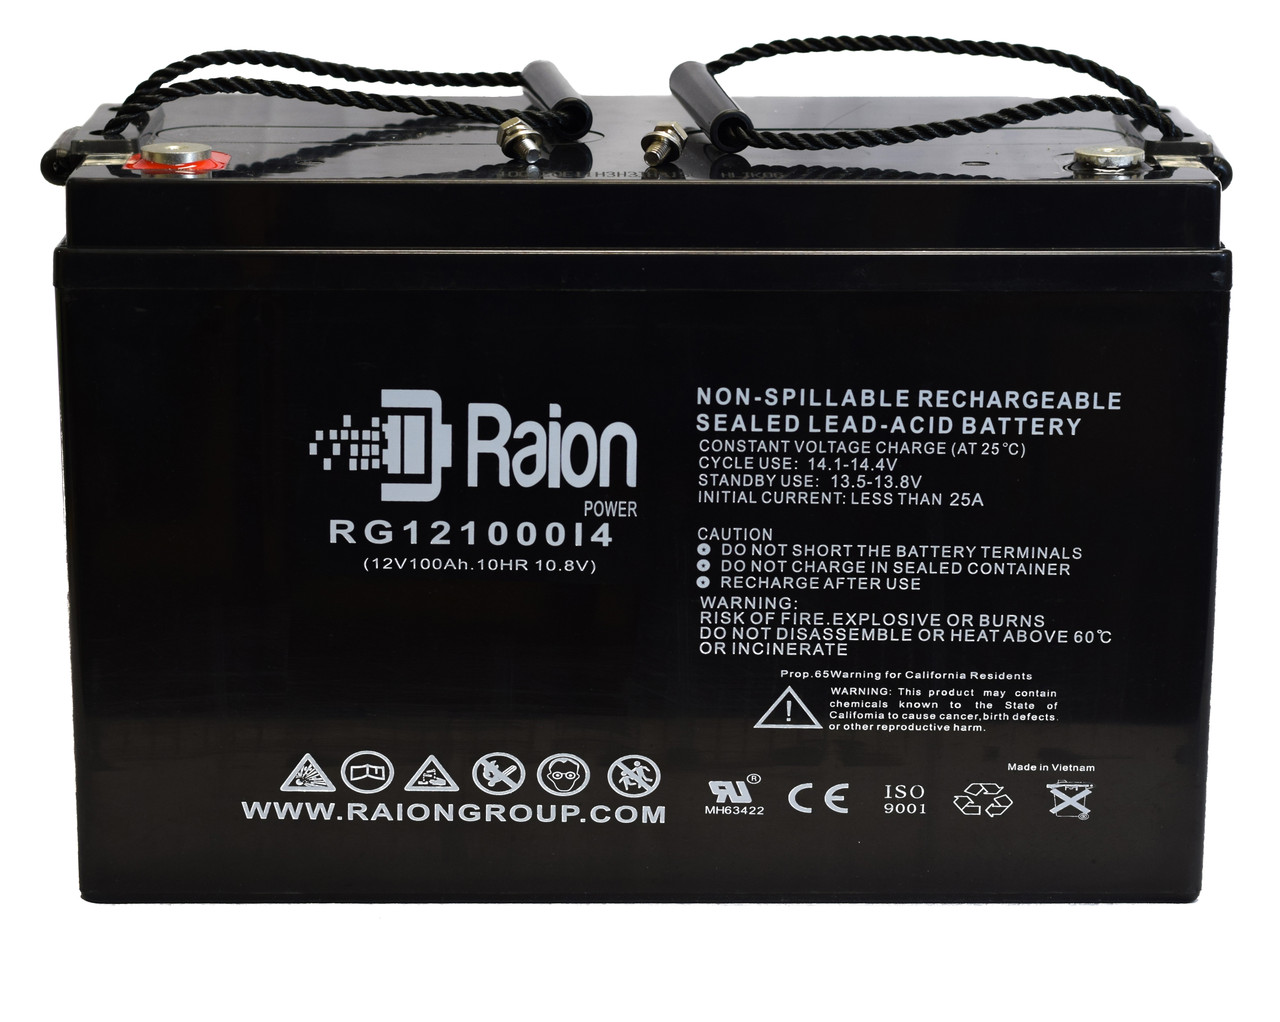 Raion Power 12V 100Ah SLA Battery With I4 Terminals For HKBil 6FM100